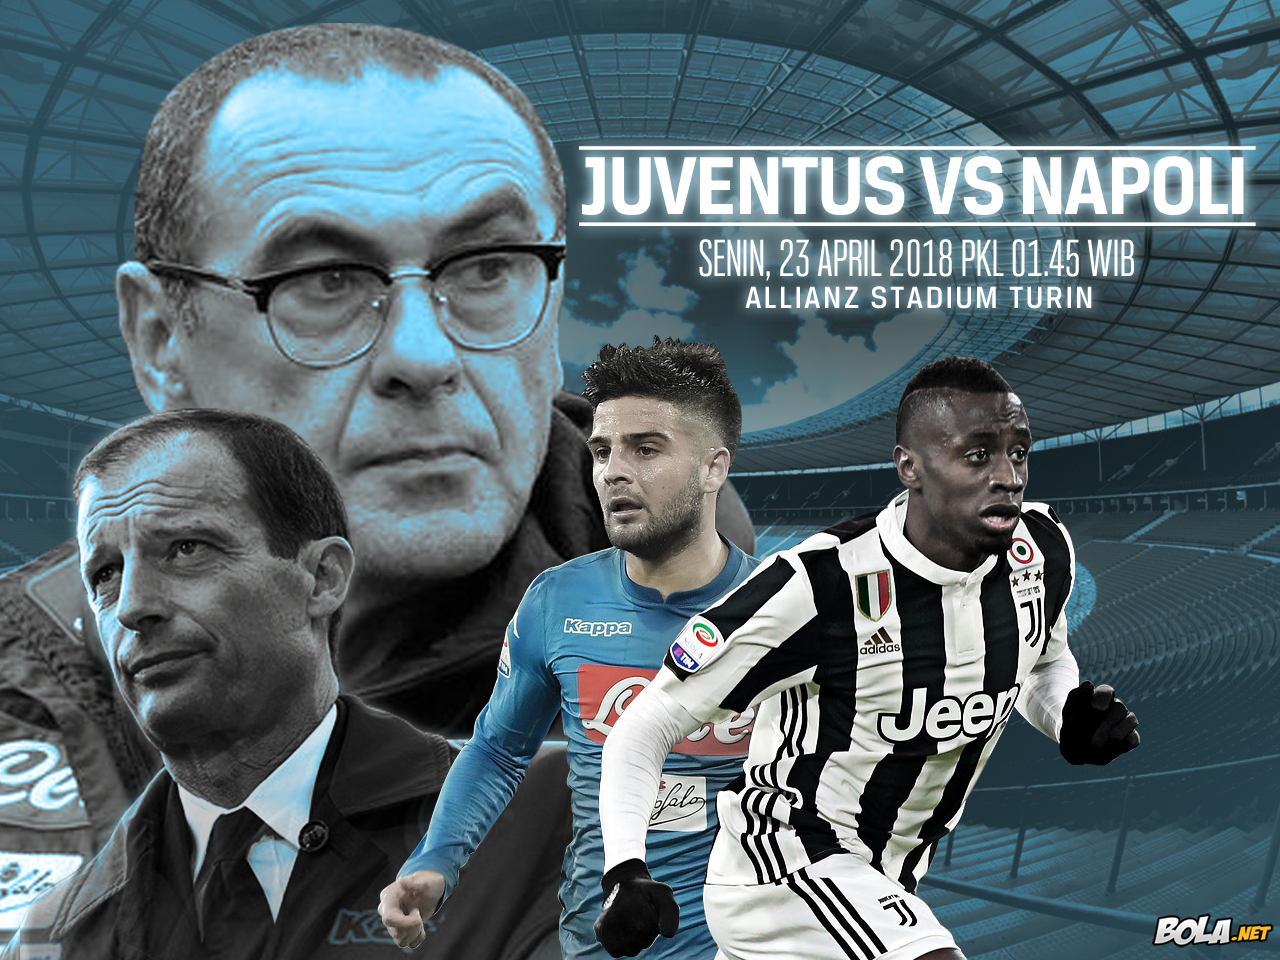 Deskripsi : Wallpaper Juventus Vs Napoli, size: 1280x960